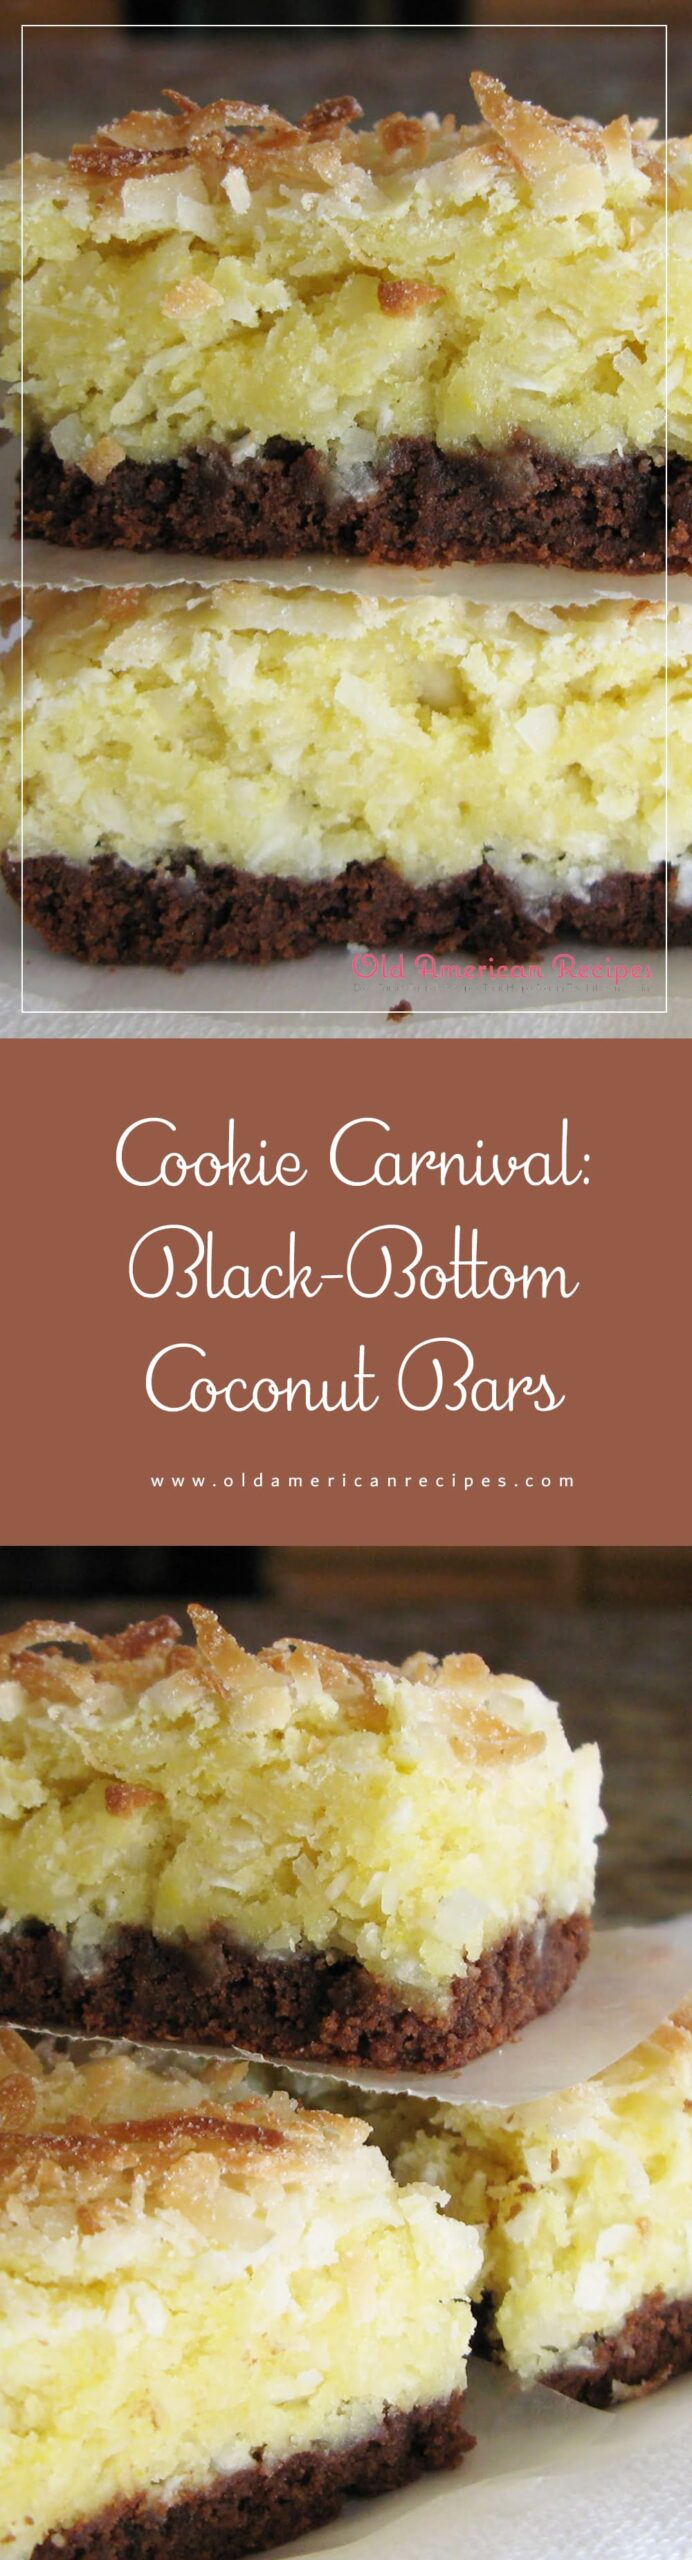 Black-Bottom Coconut Bars